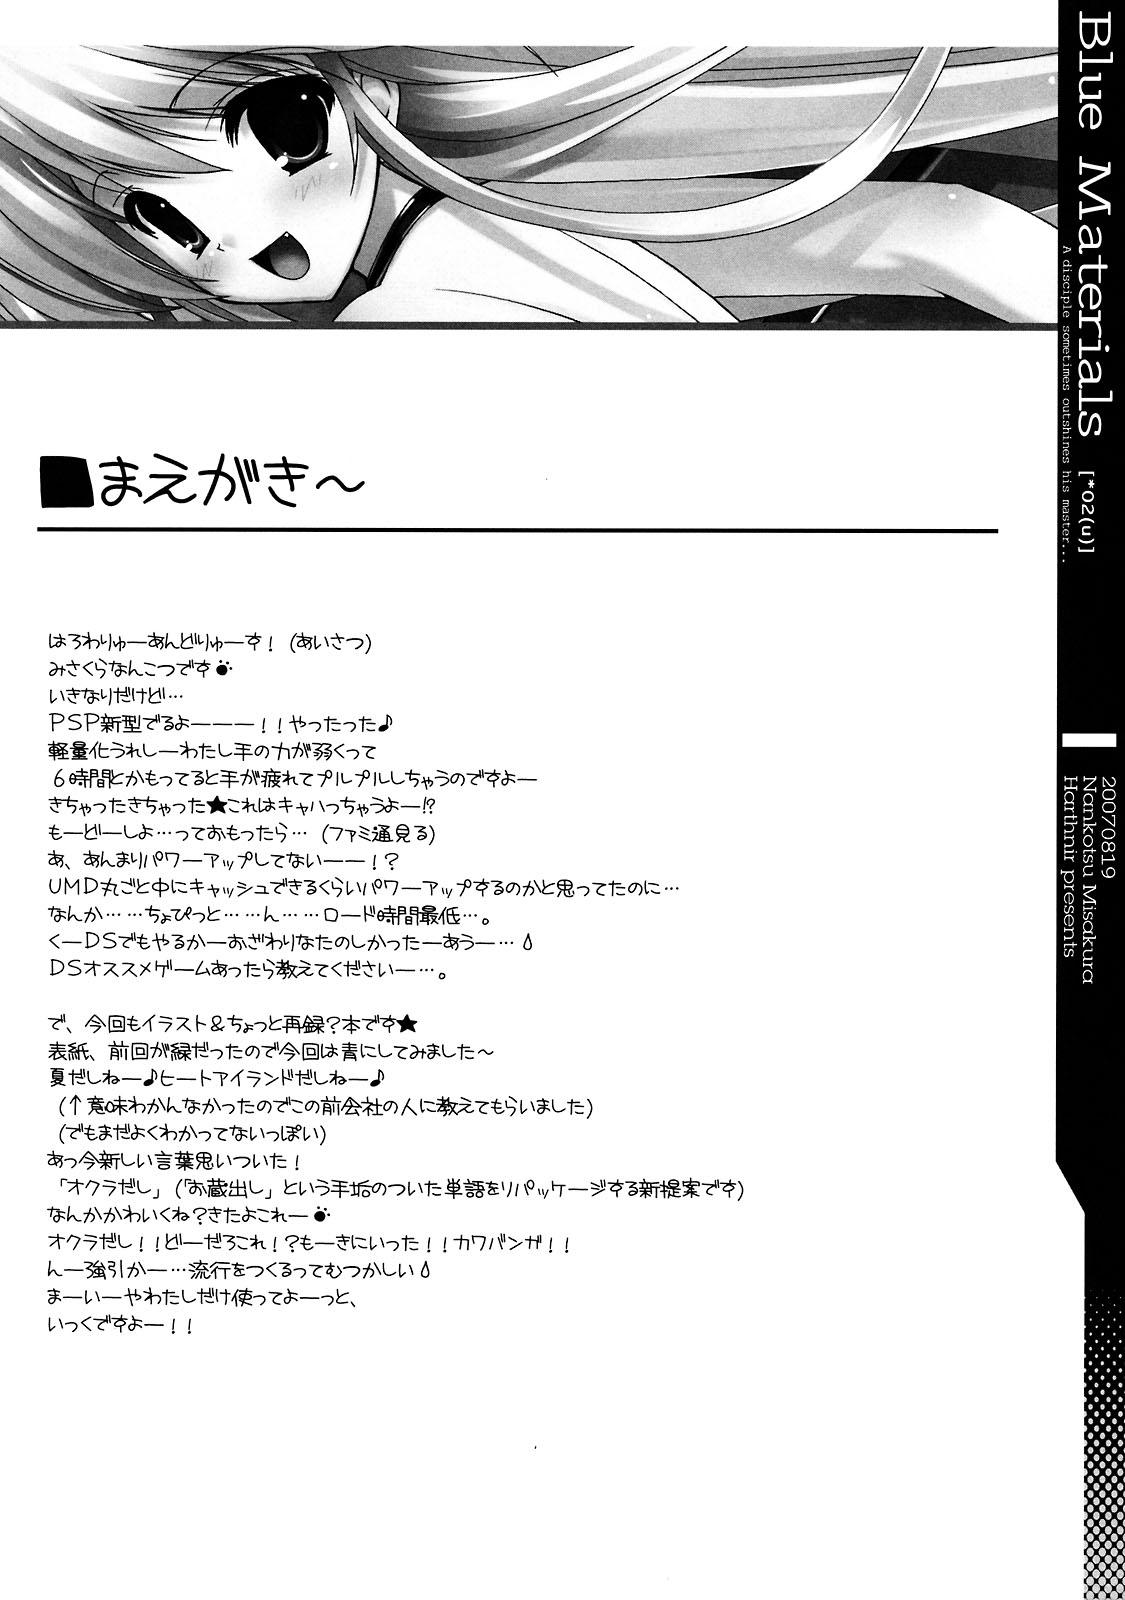 Head Blue Materials. - Code geass Samurai spirits Rozen maiden Higurashi no naku koro ni Star ocean Moekan Everybodys tennis Perfect Body - Page 4